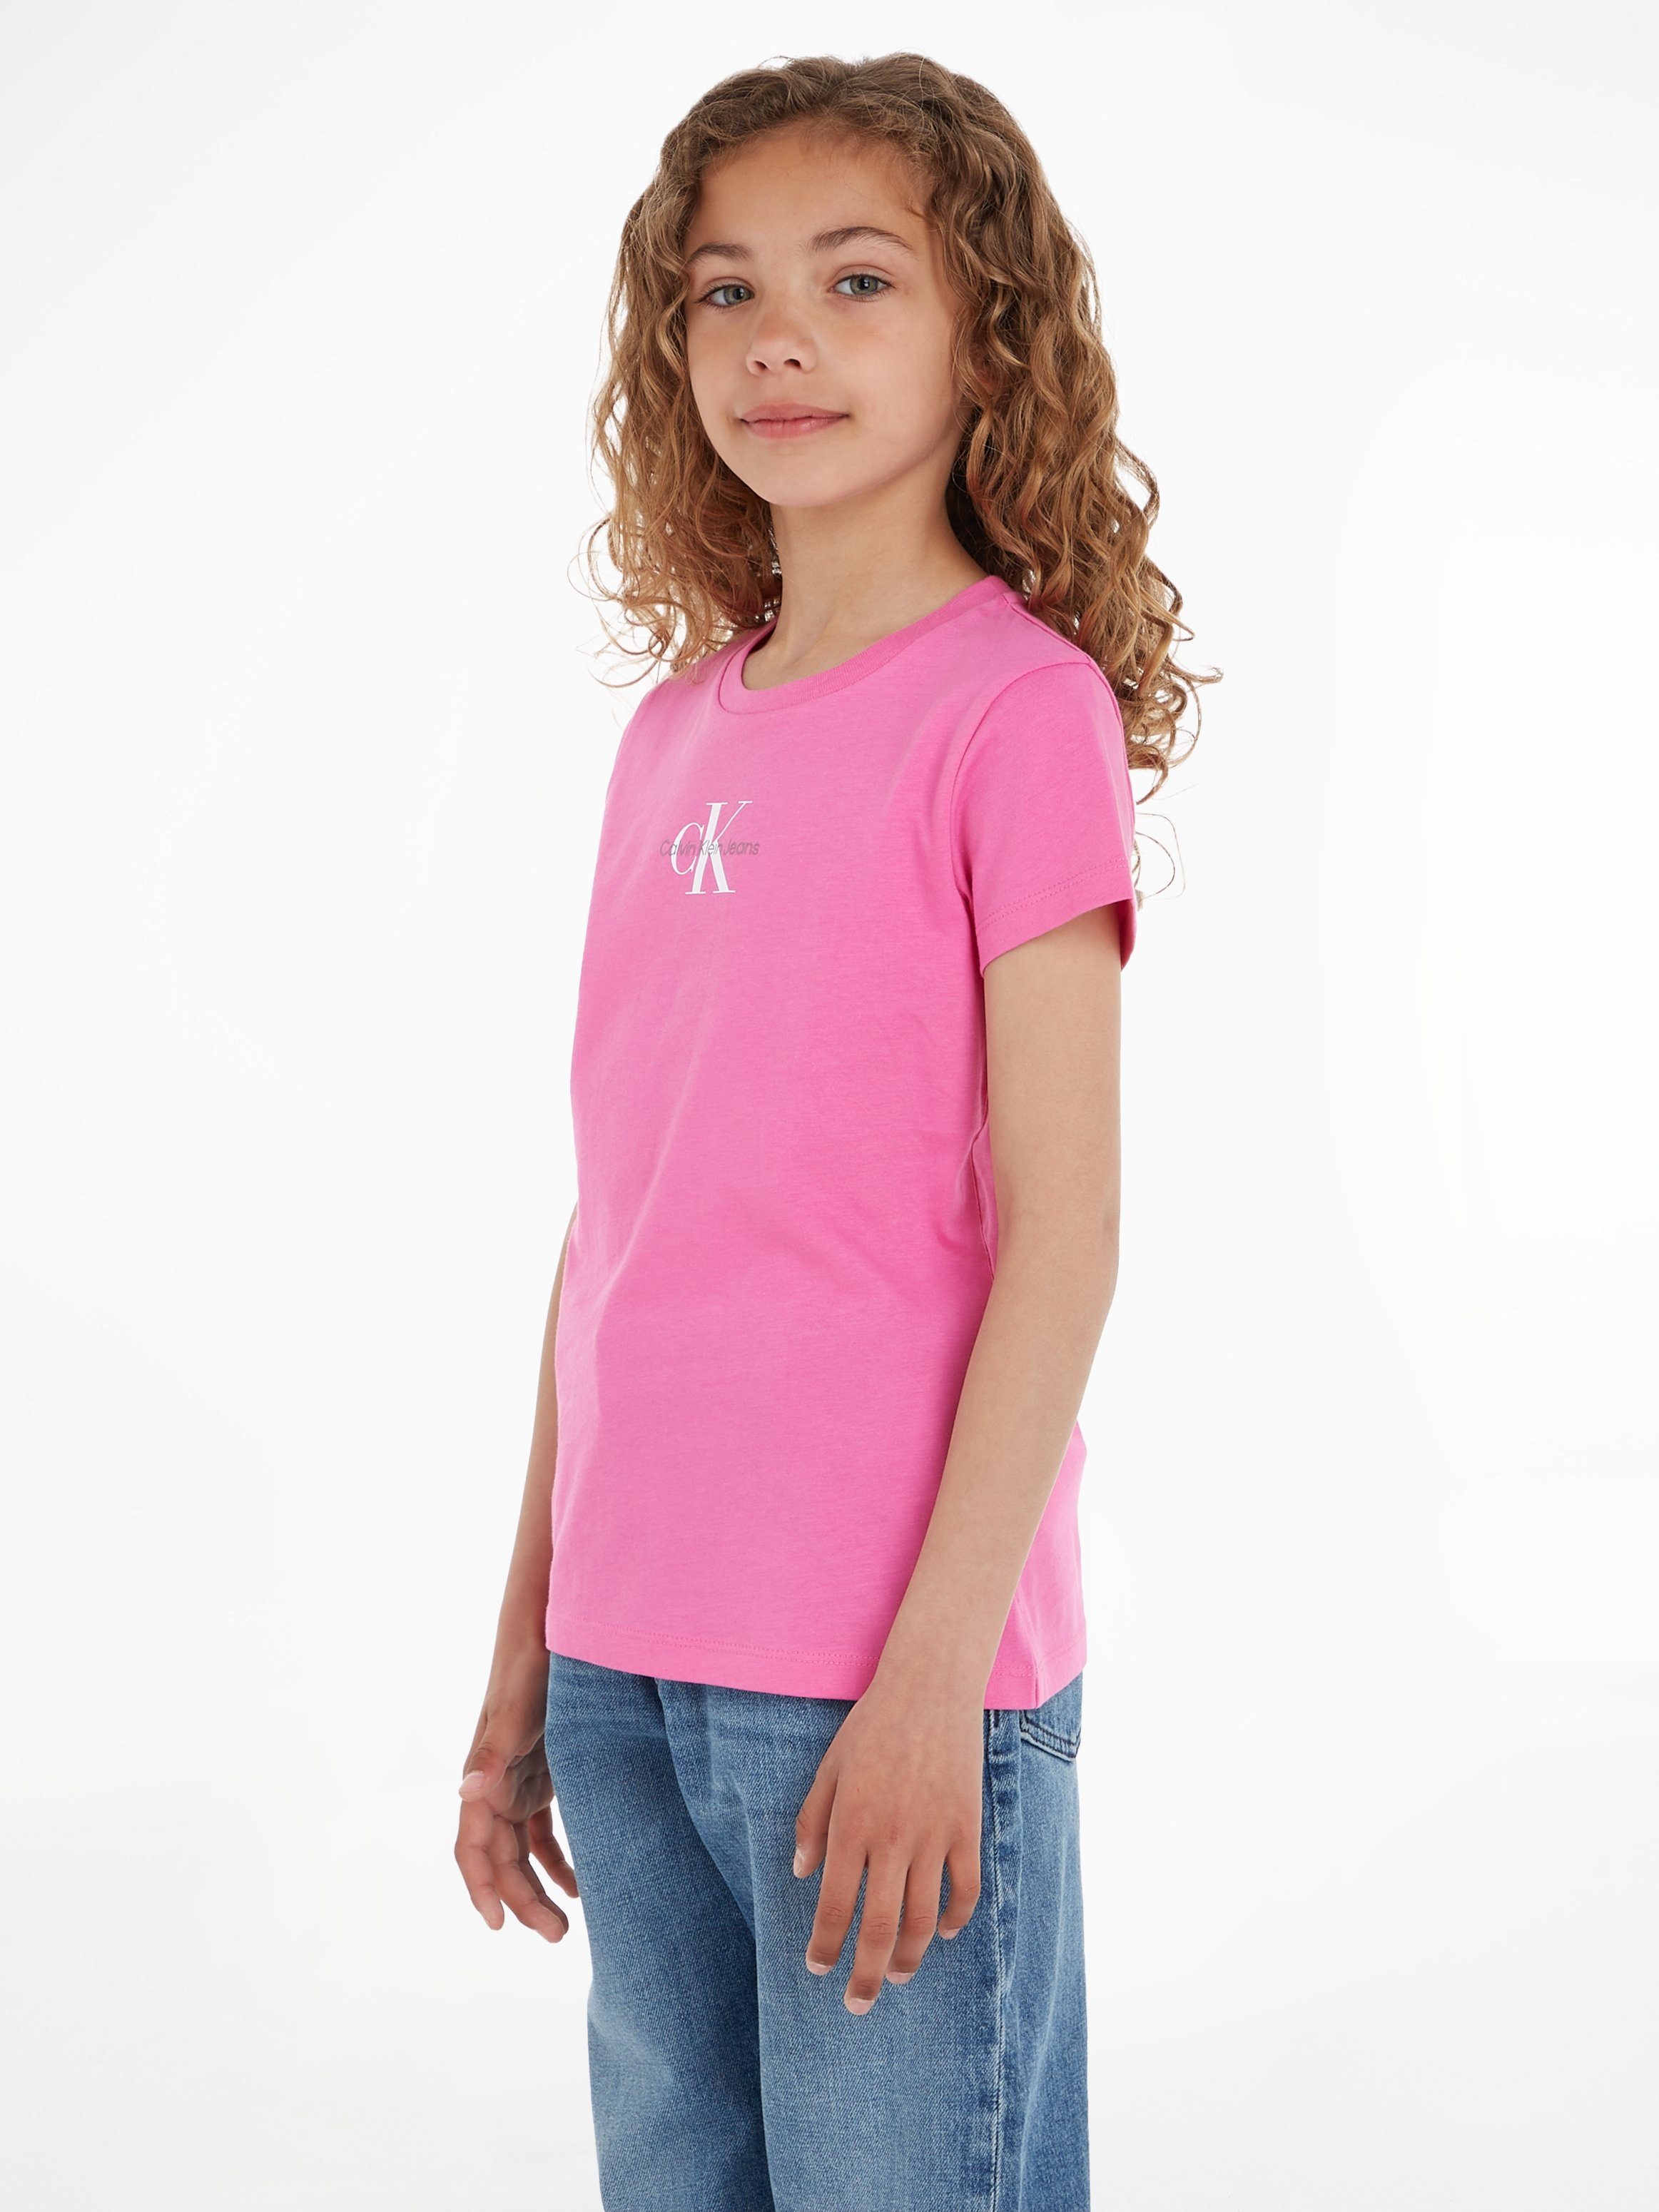 Calvin Klein T-shirt met logo felroze Meisjes Katoen Ronde hals Logo 128